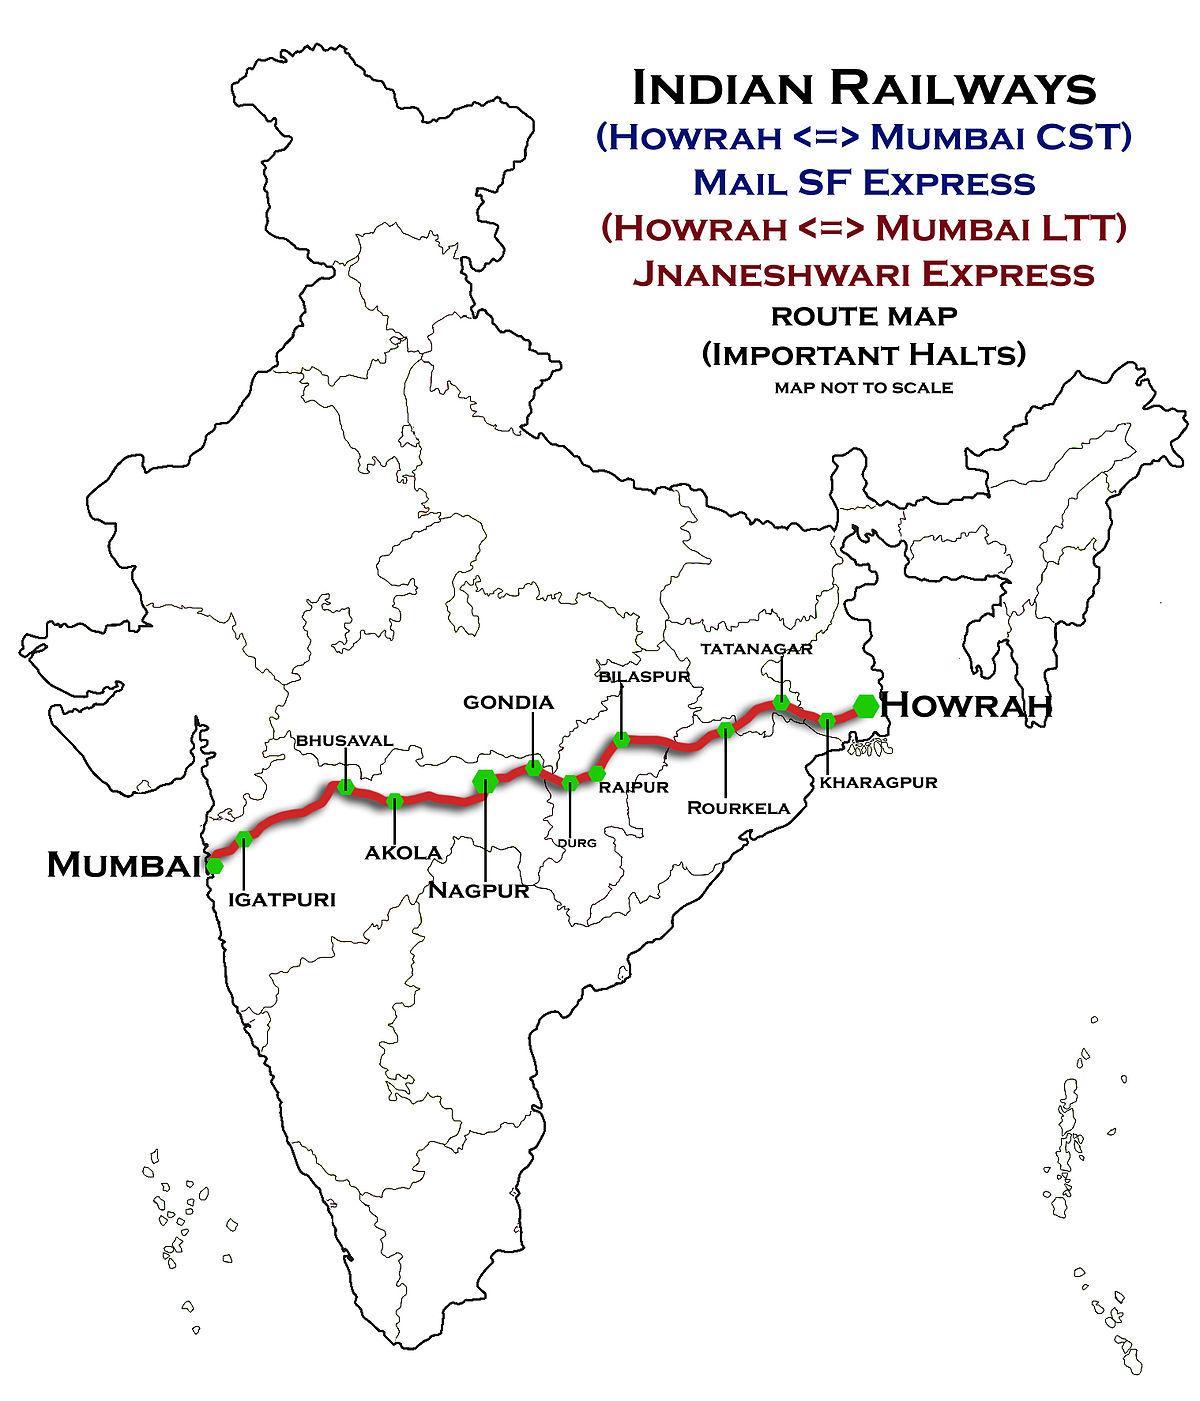 nagpur Mumbai voie express de la carte